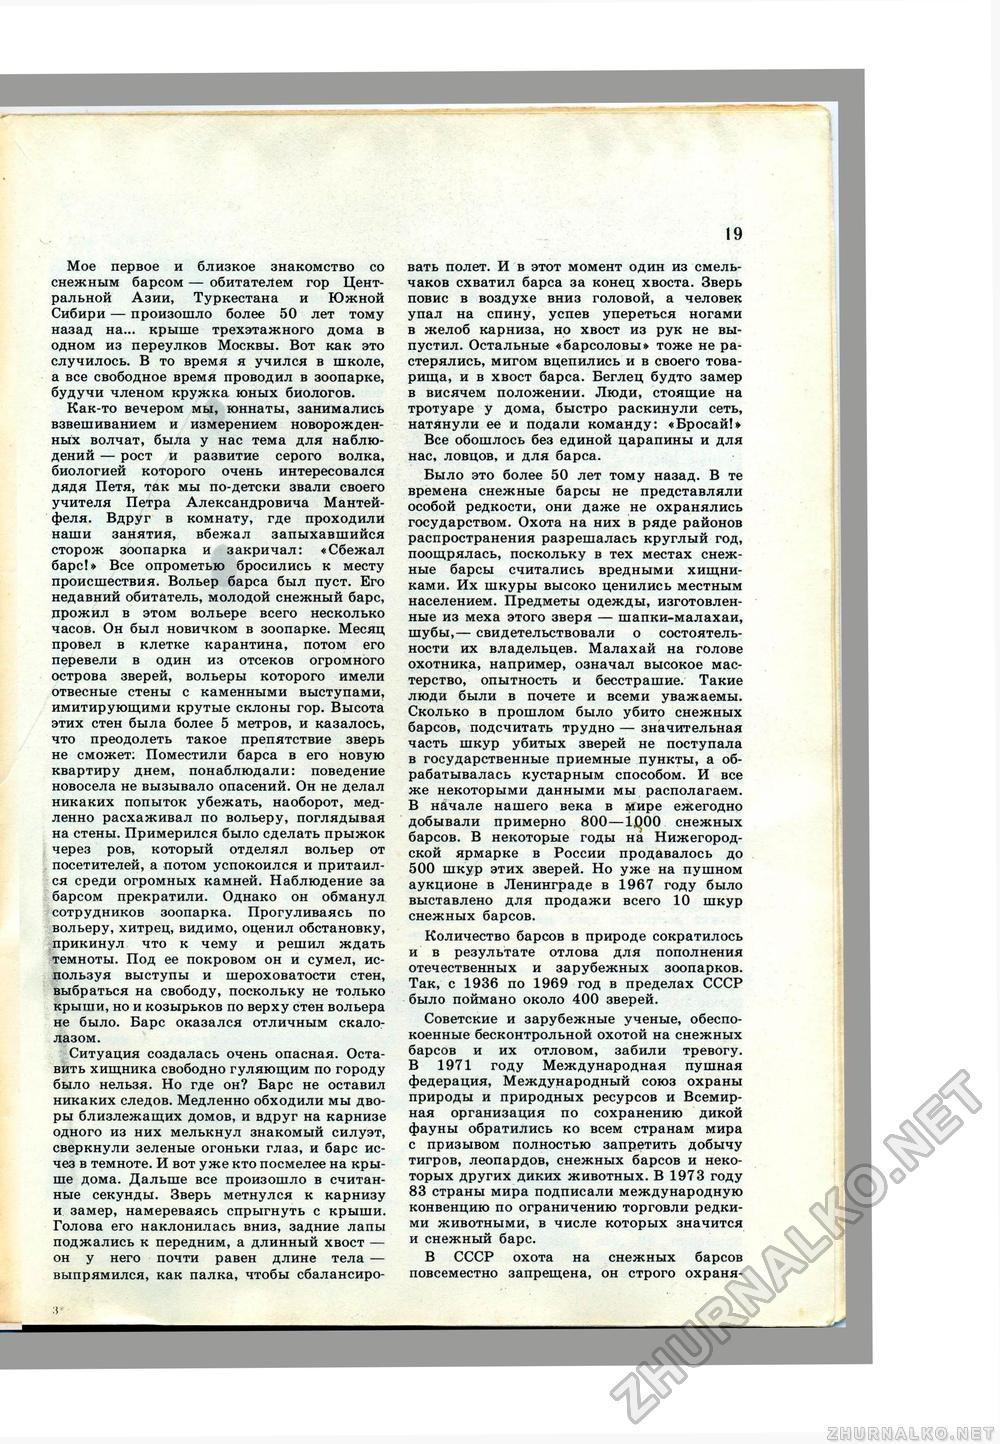 Юный Натуралист 1981-06, страница 14